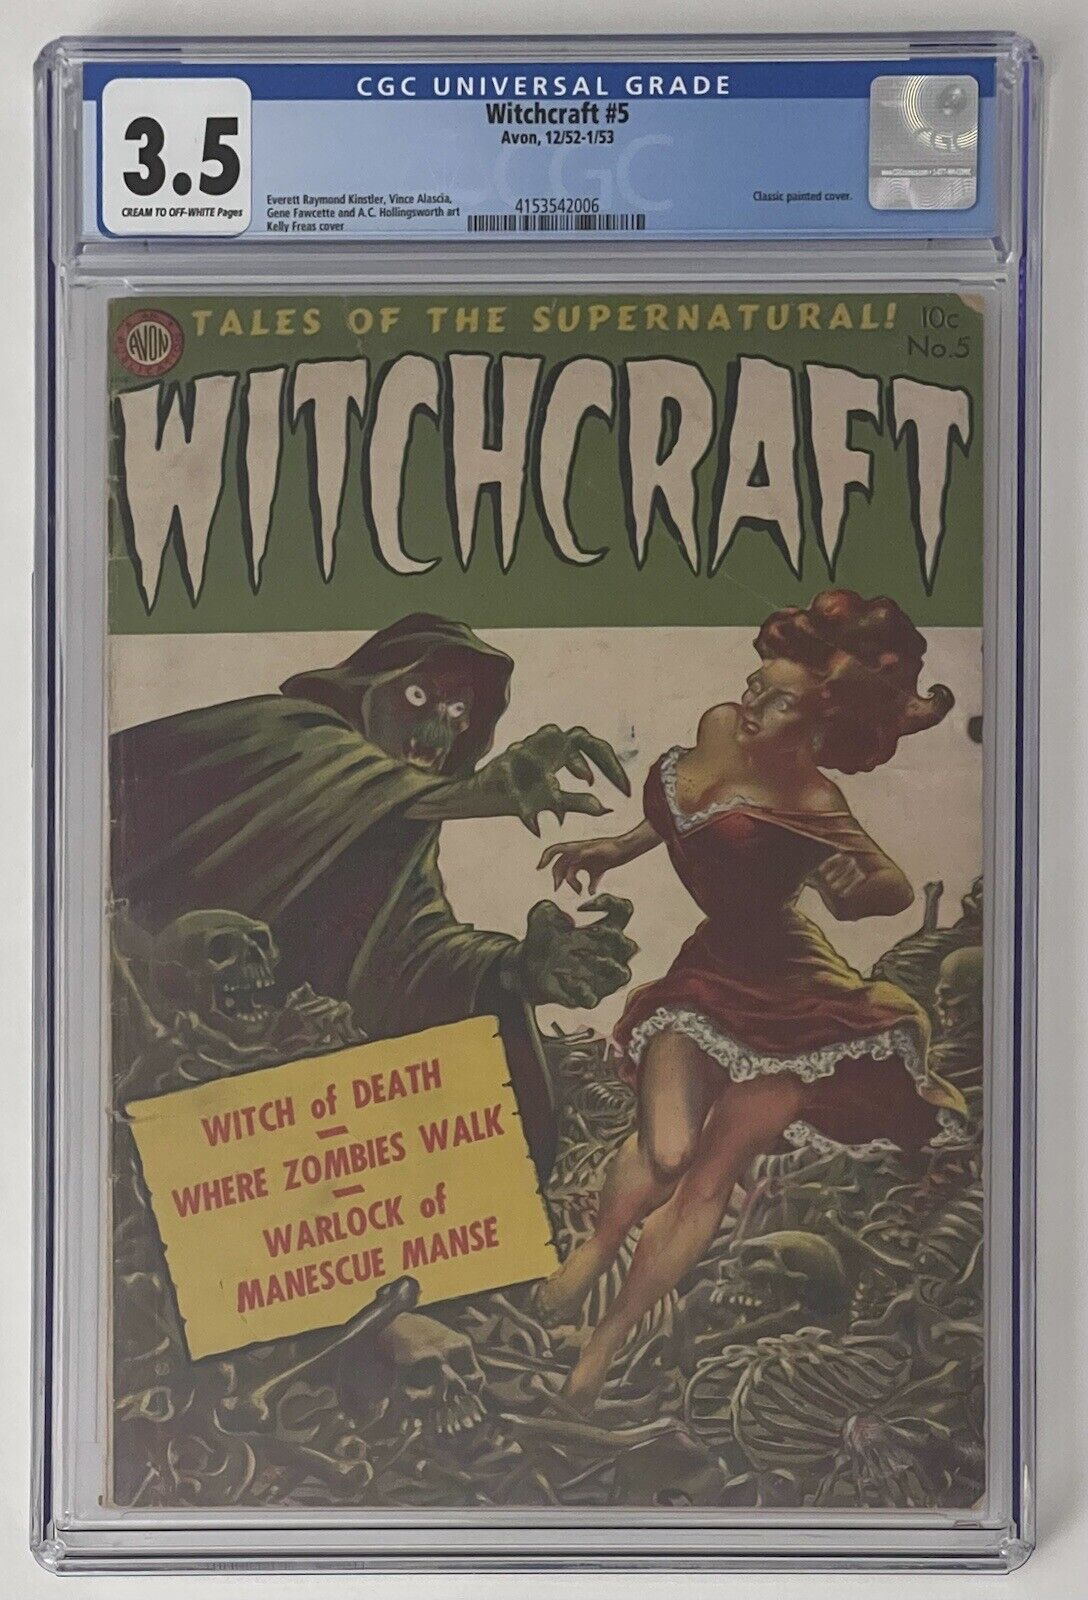 Witchcraft #5 (1952) - CGC 3.5 - Avon classic cover